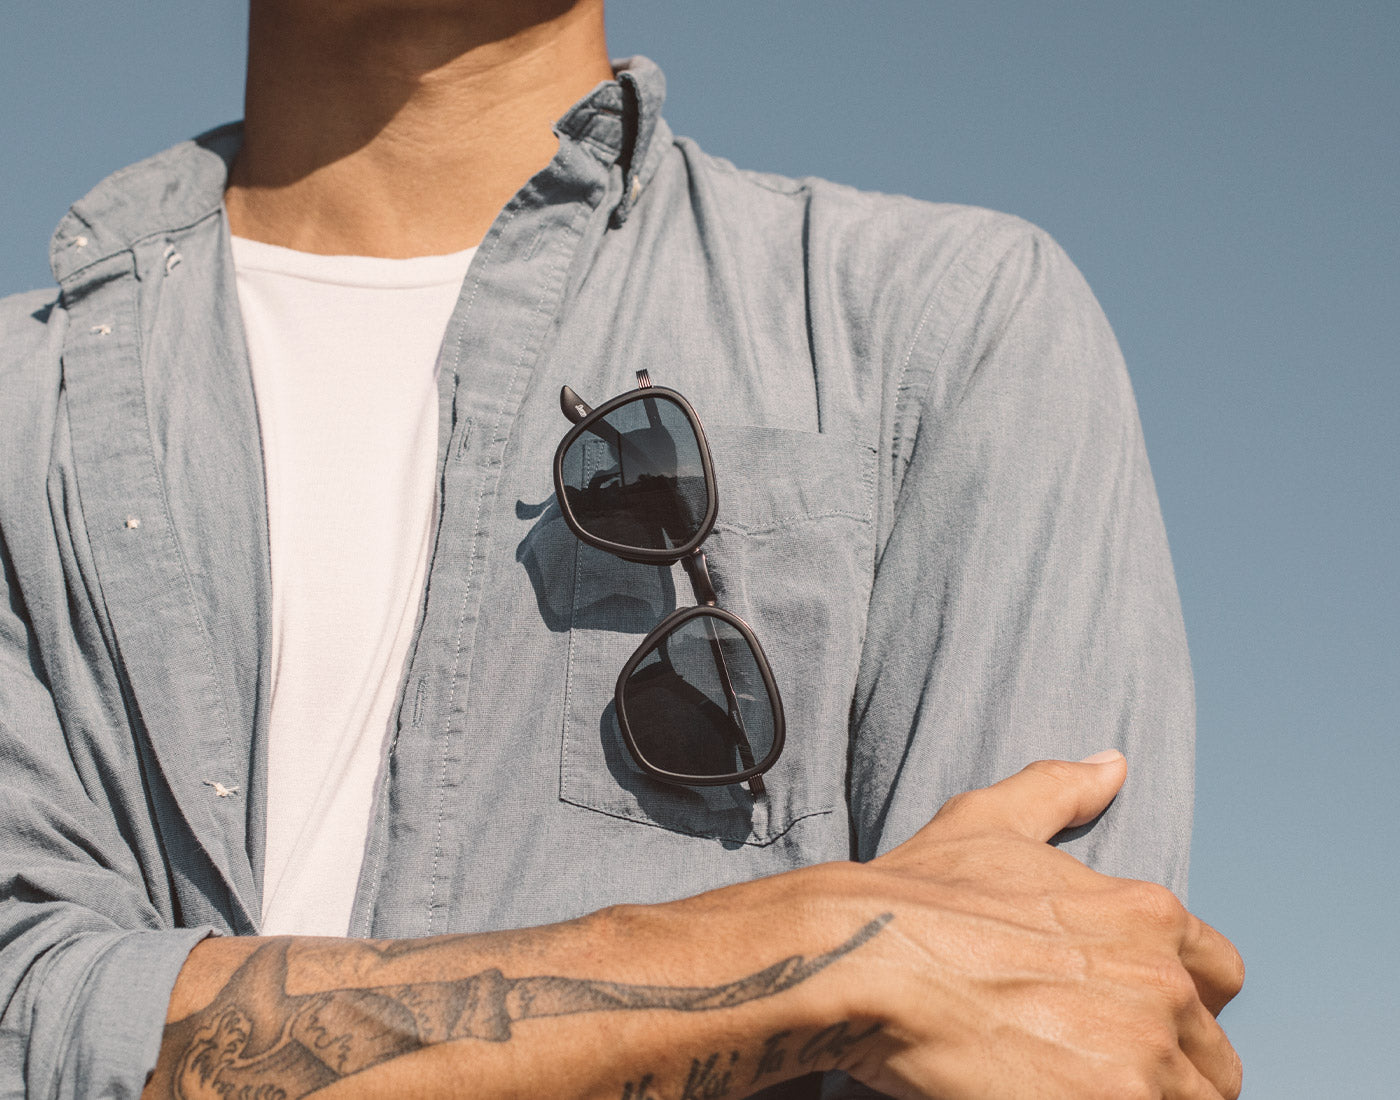 sunski bernina sunglasses hanging on a shirt pocket